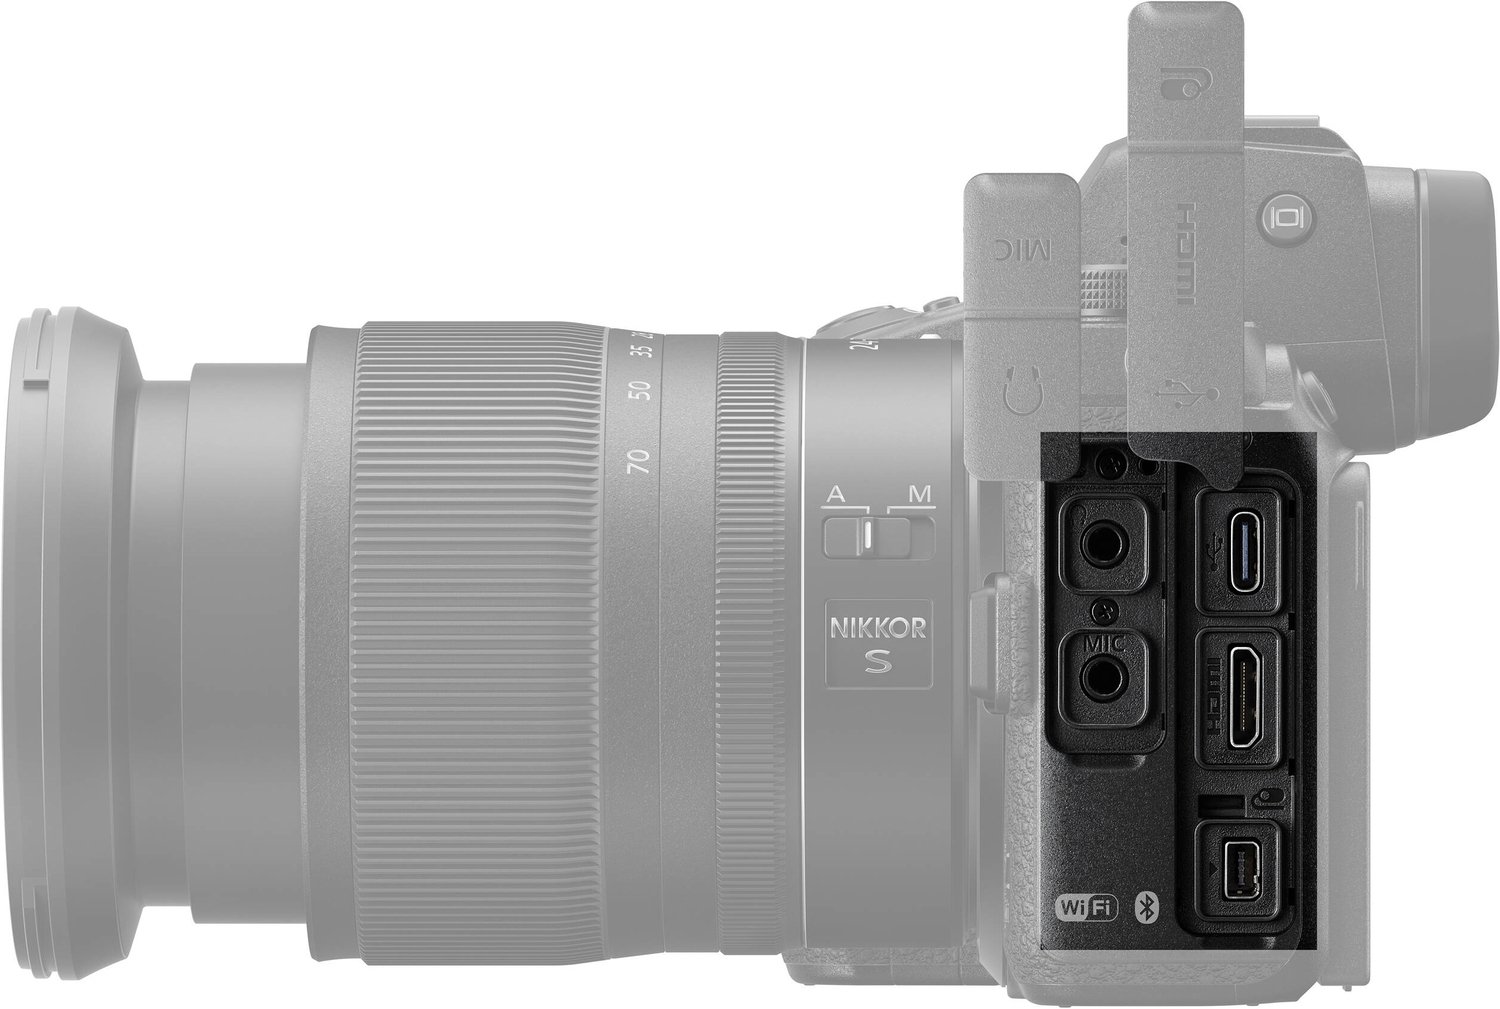 Фотоаппарат Nikon Z7II Body черный